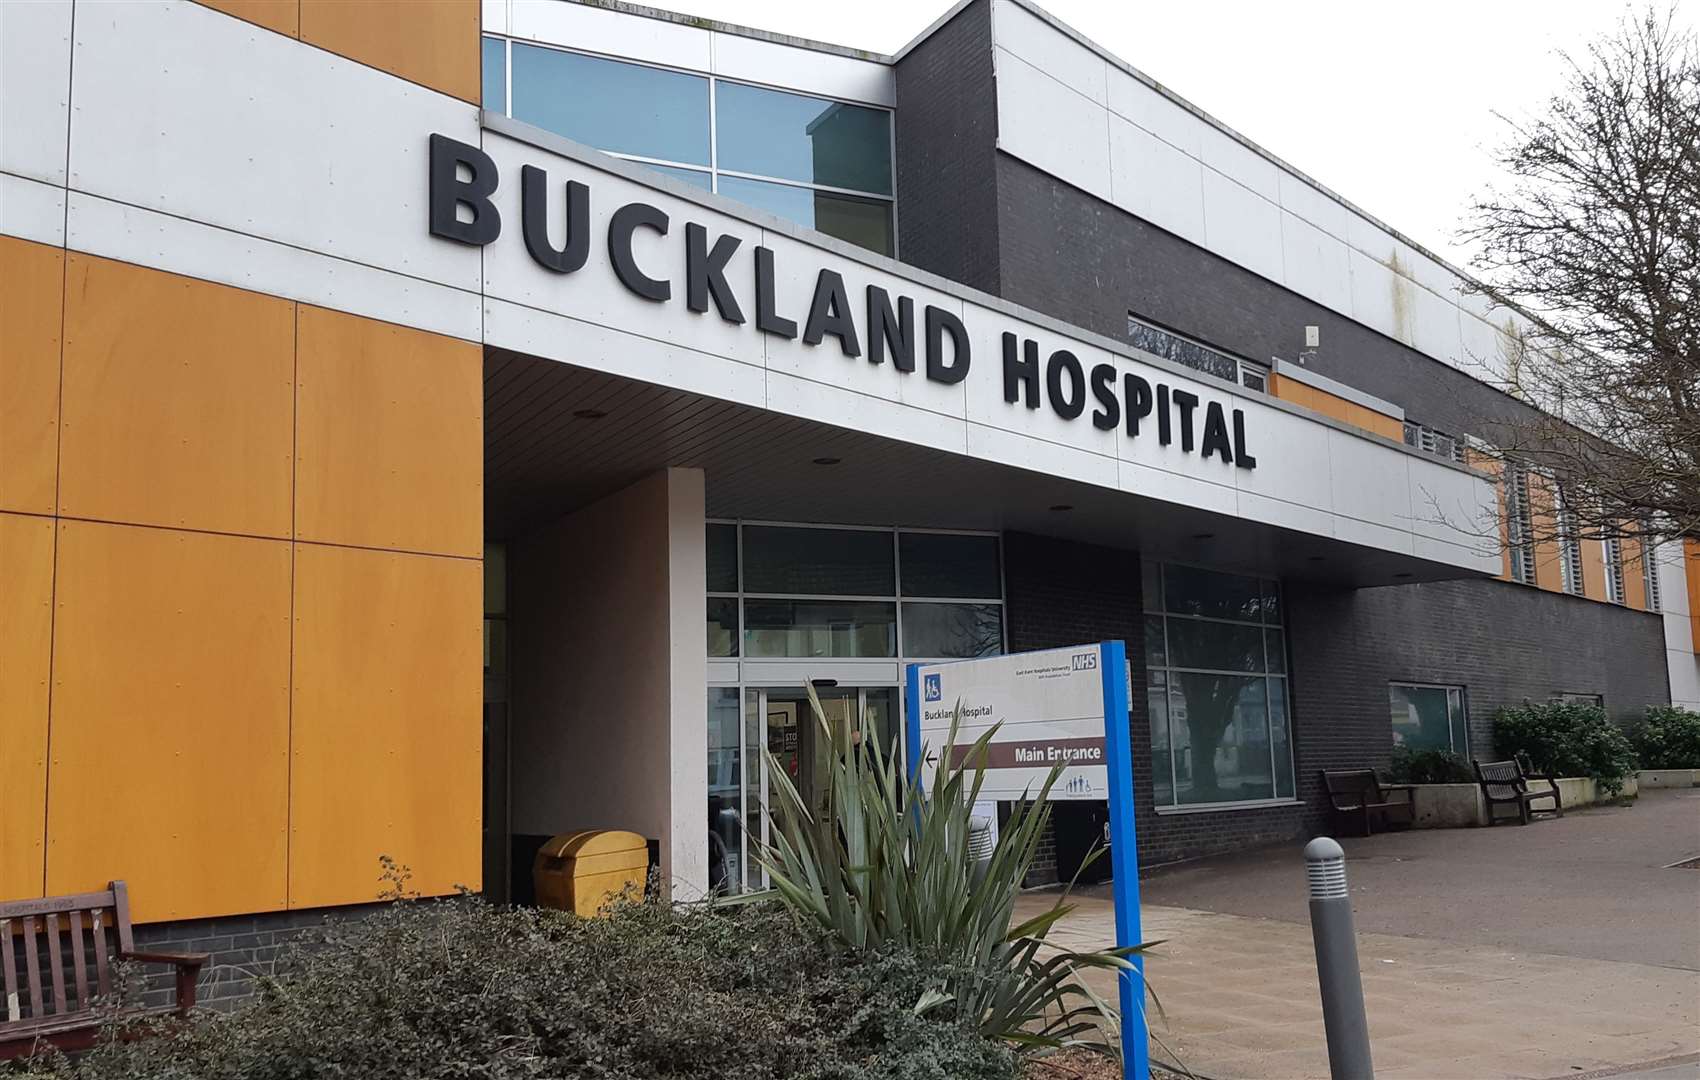 The present Buckland Hospital